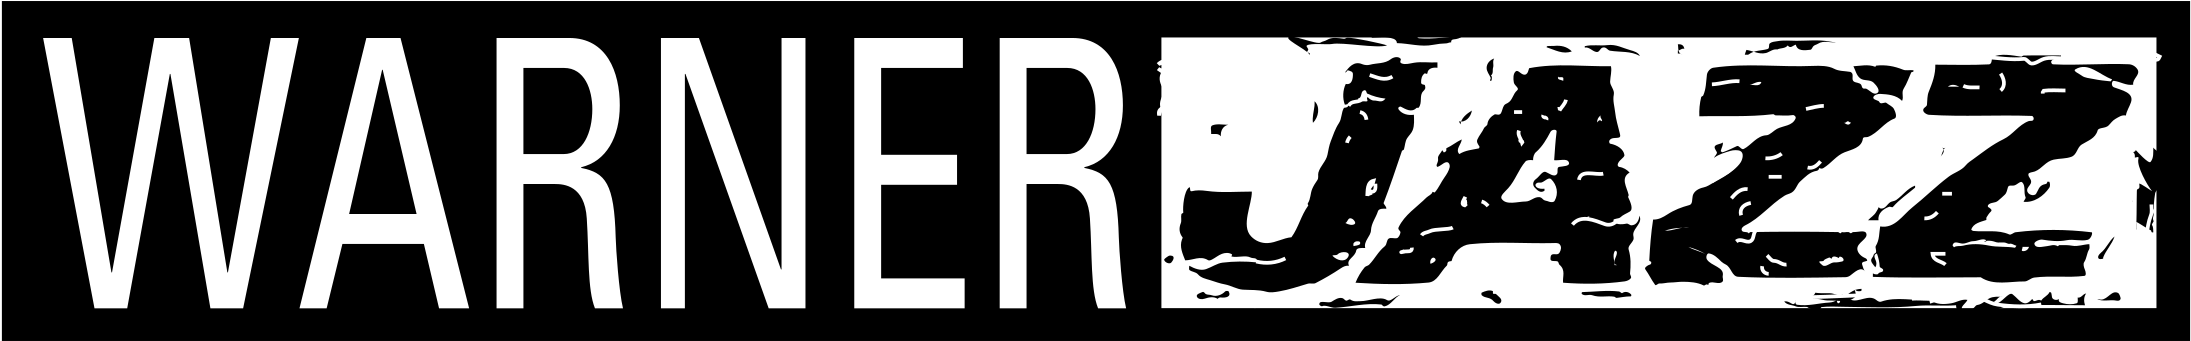 Warner Jazz Logo Png Transparent - Vector Graphics (2400x2400), Png Download